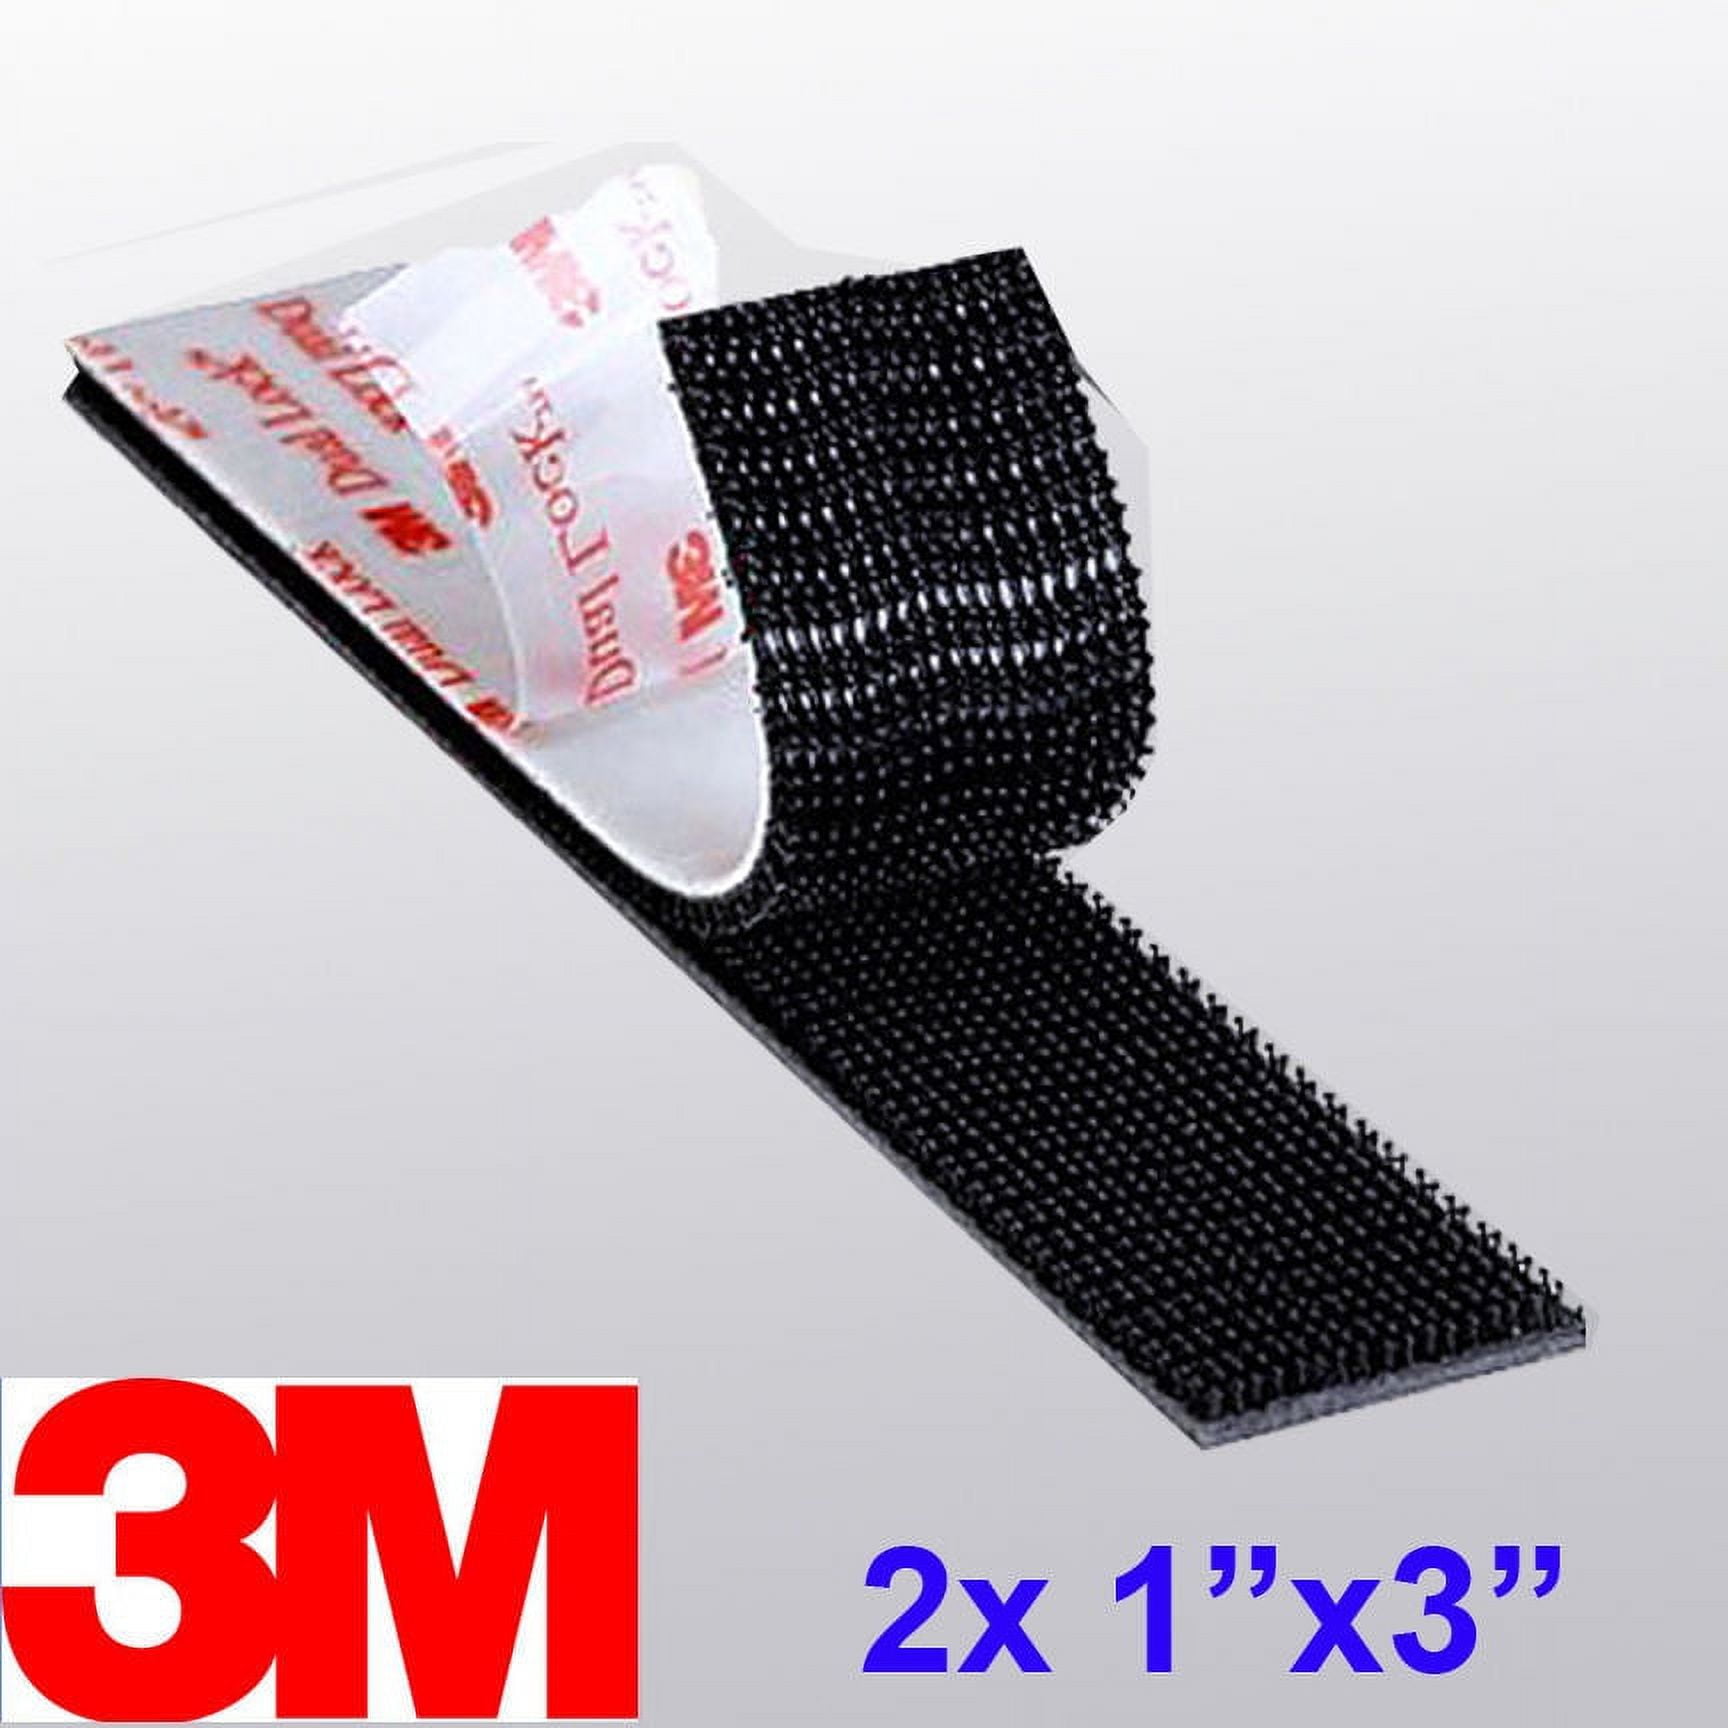 3M™ Strips - Dual Lock™ SJ3550 Trial Bag